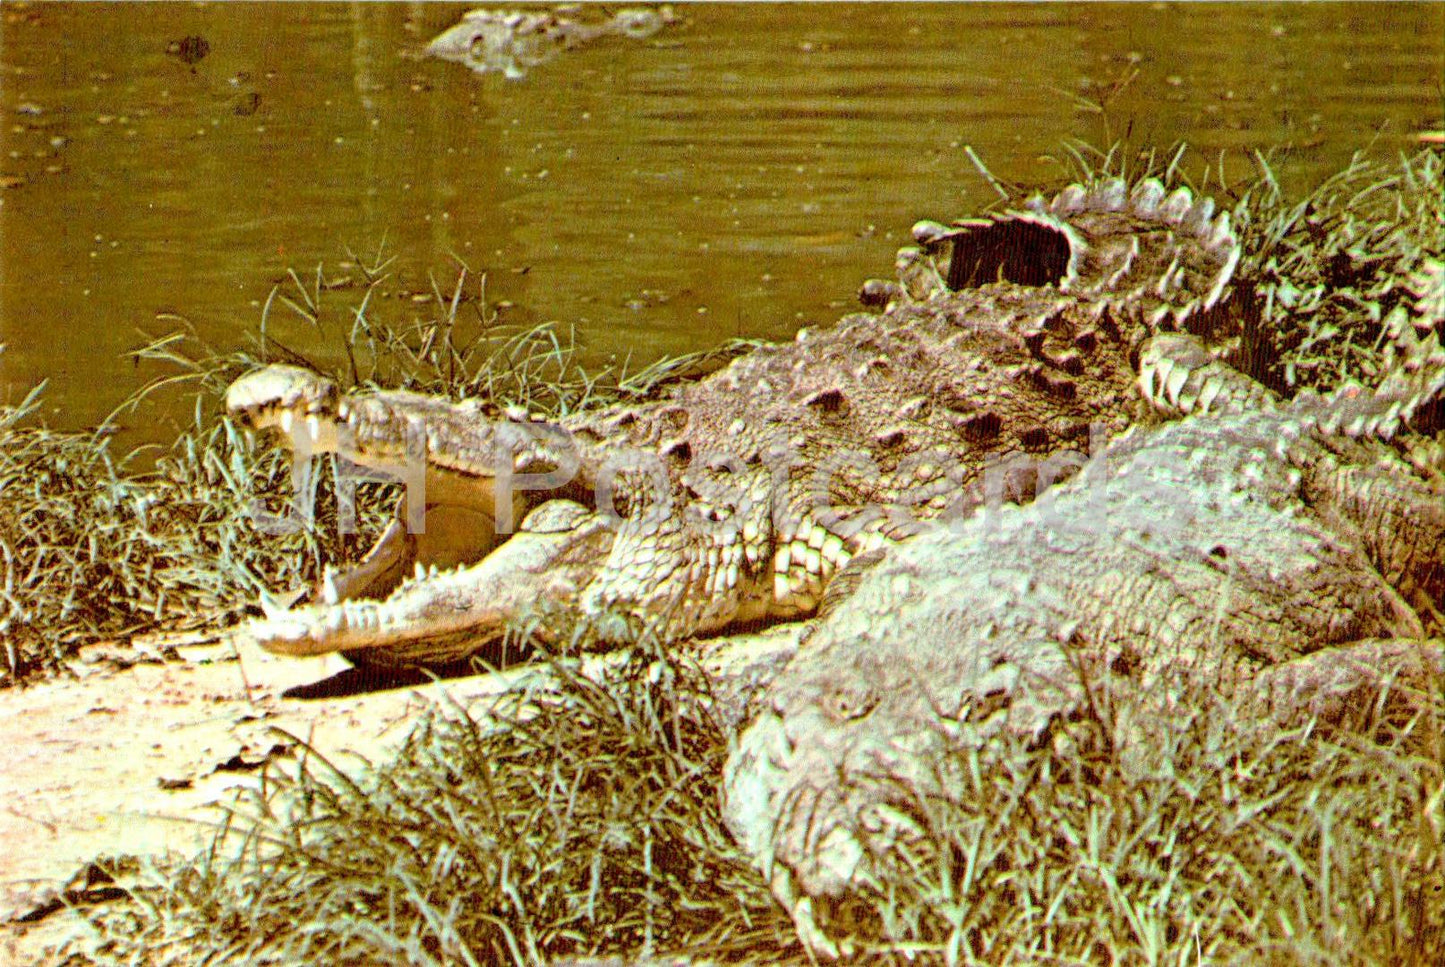 American crocodile - Crocodylus acutus - National Zoo - Cuba - unused